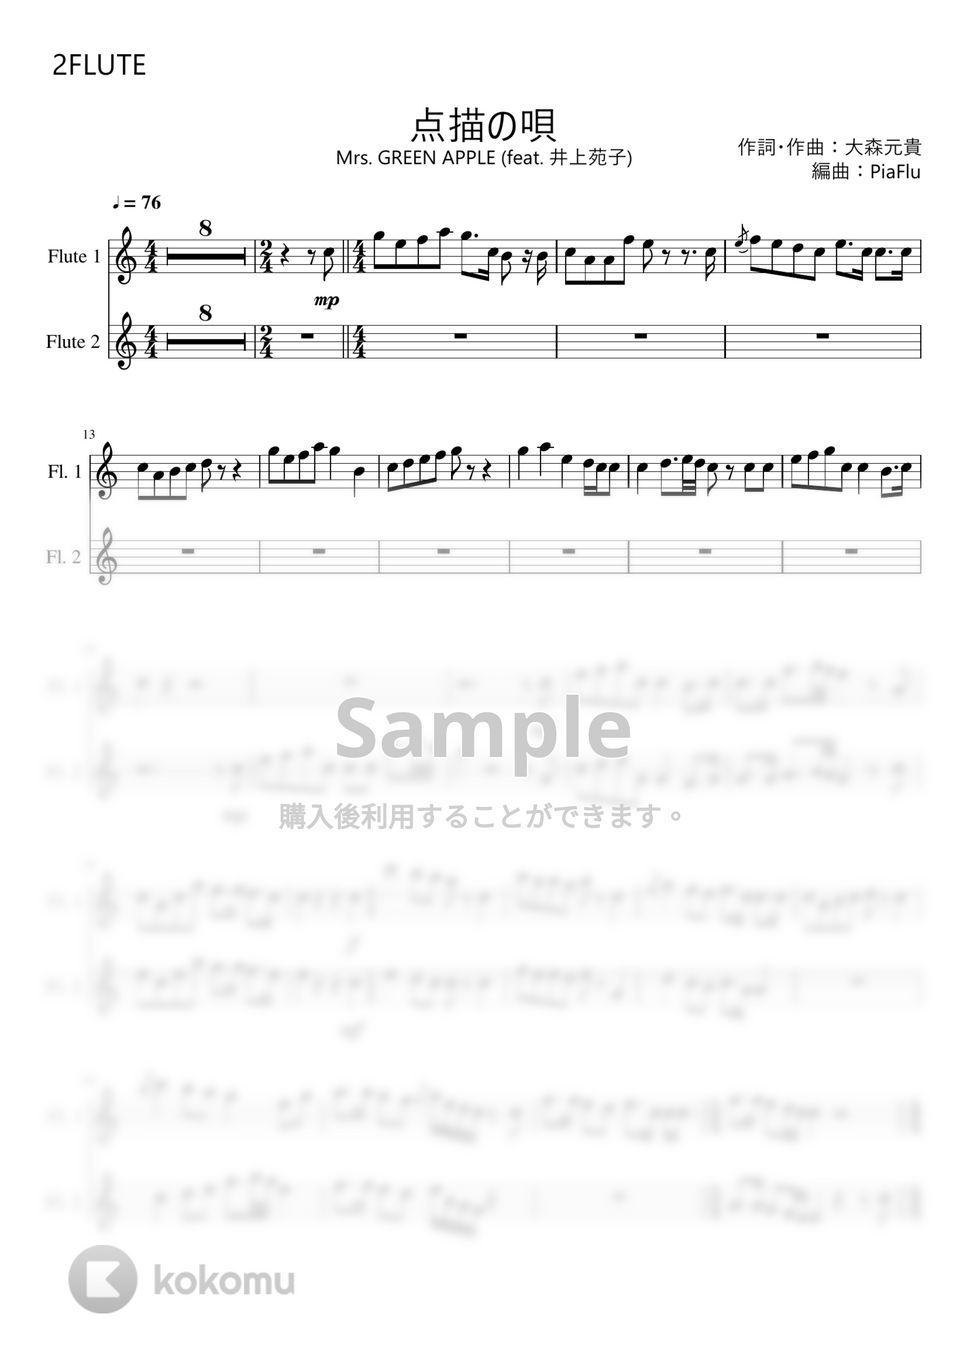 Mrs.GREEN APPLE (feat.井上苑子) - 点描の唄 (フルート2重奏) by PiaFlu